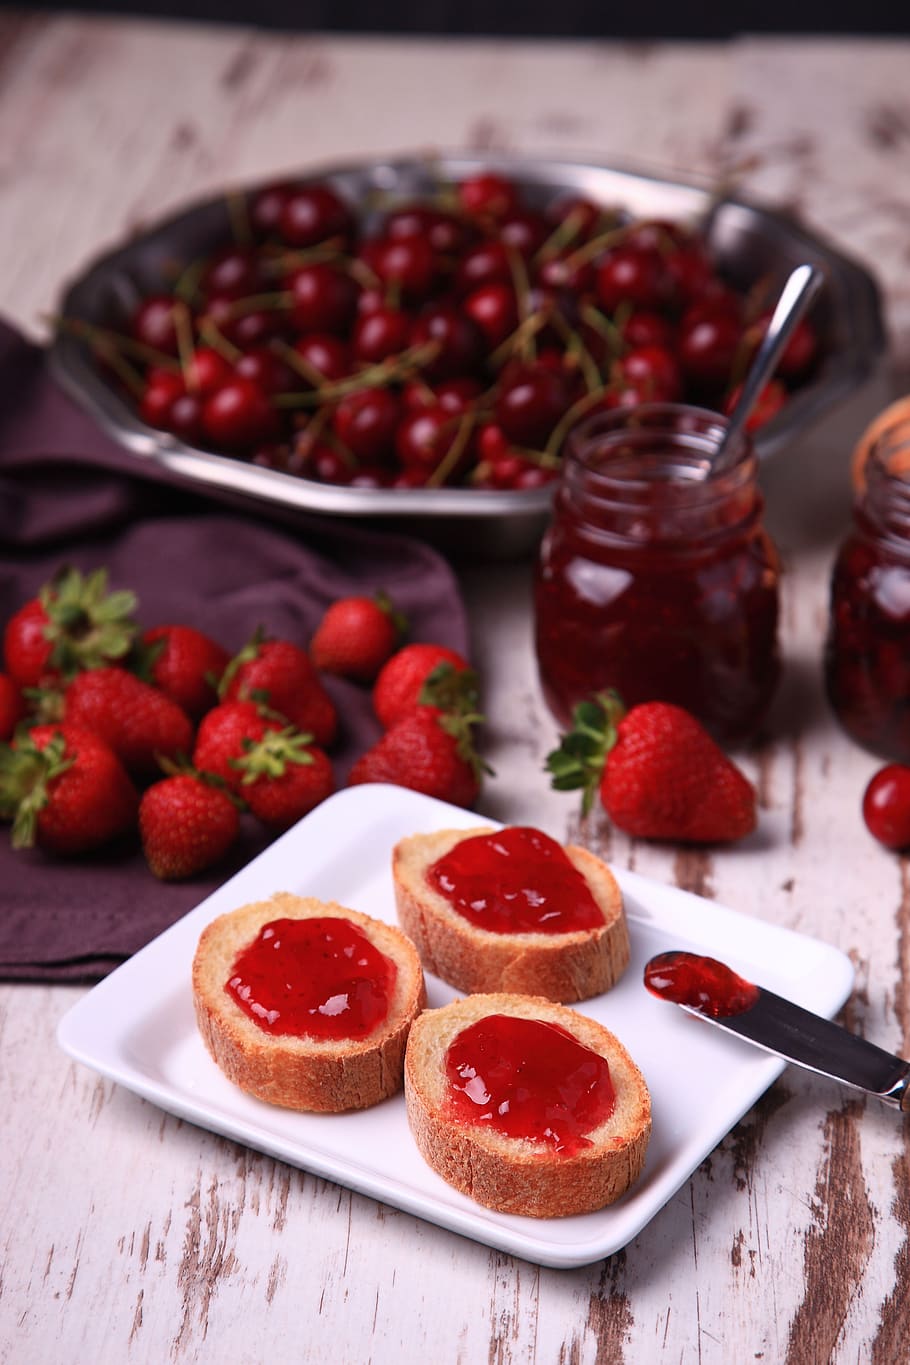 jam, fruit, jar, sweet, nature, cherries, food, food and drink, healthy eating, freshness